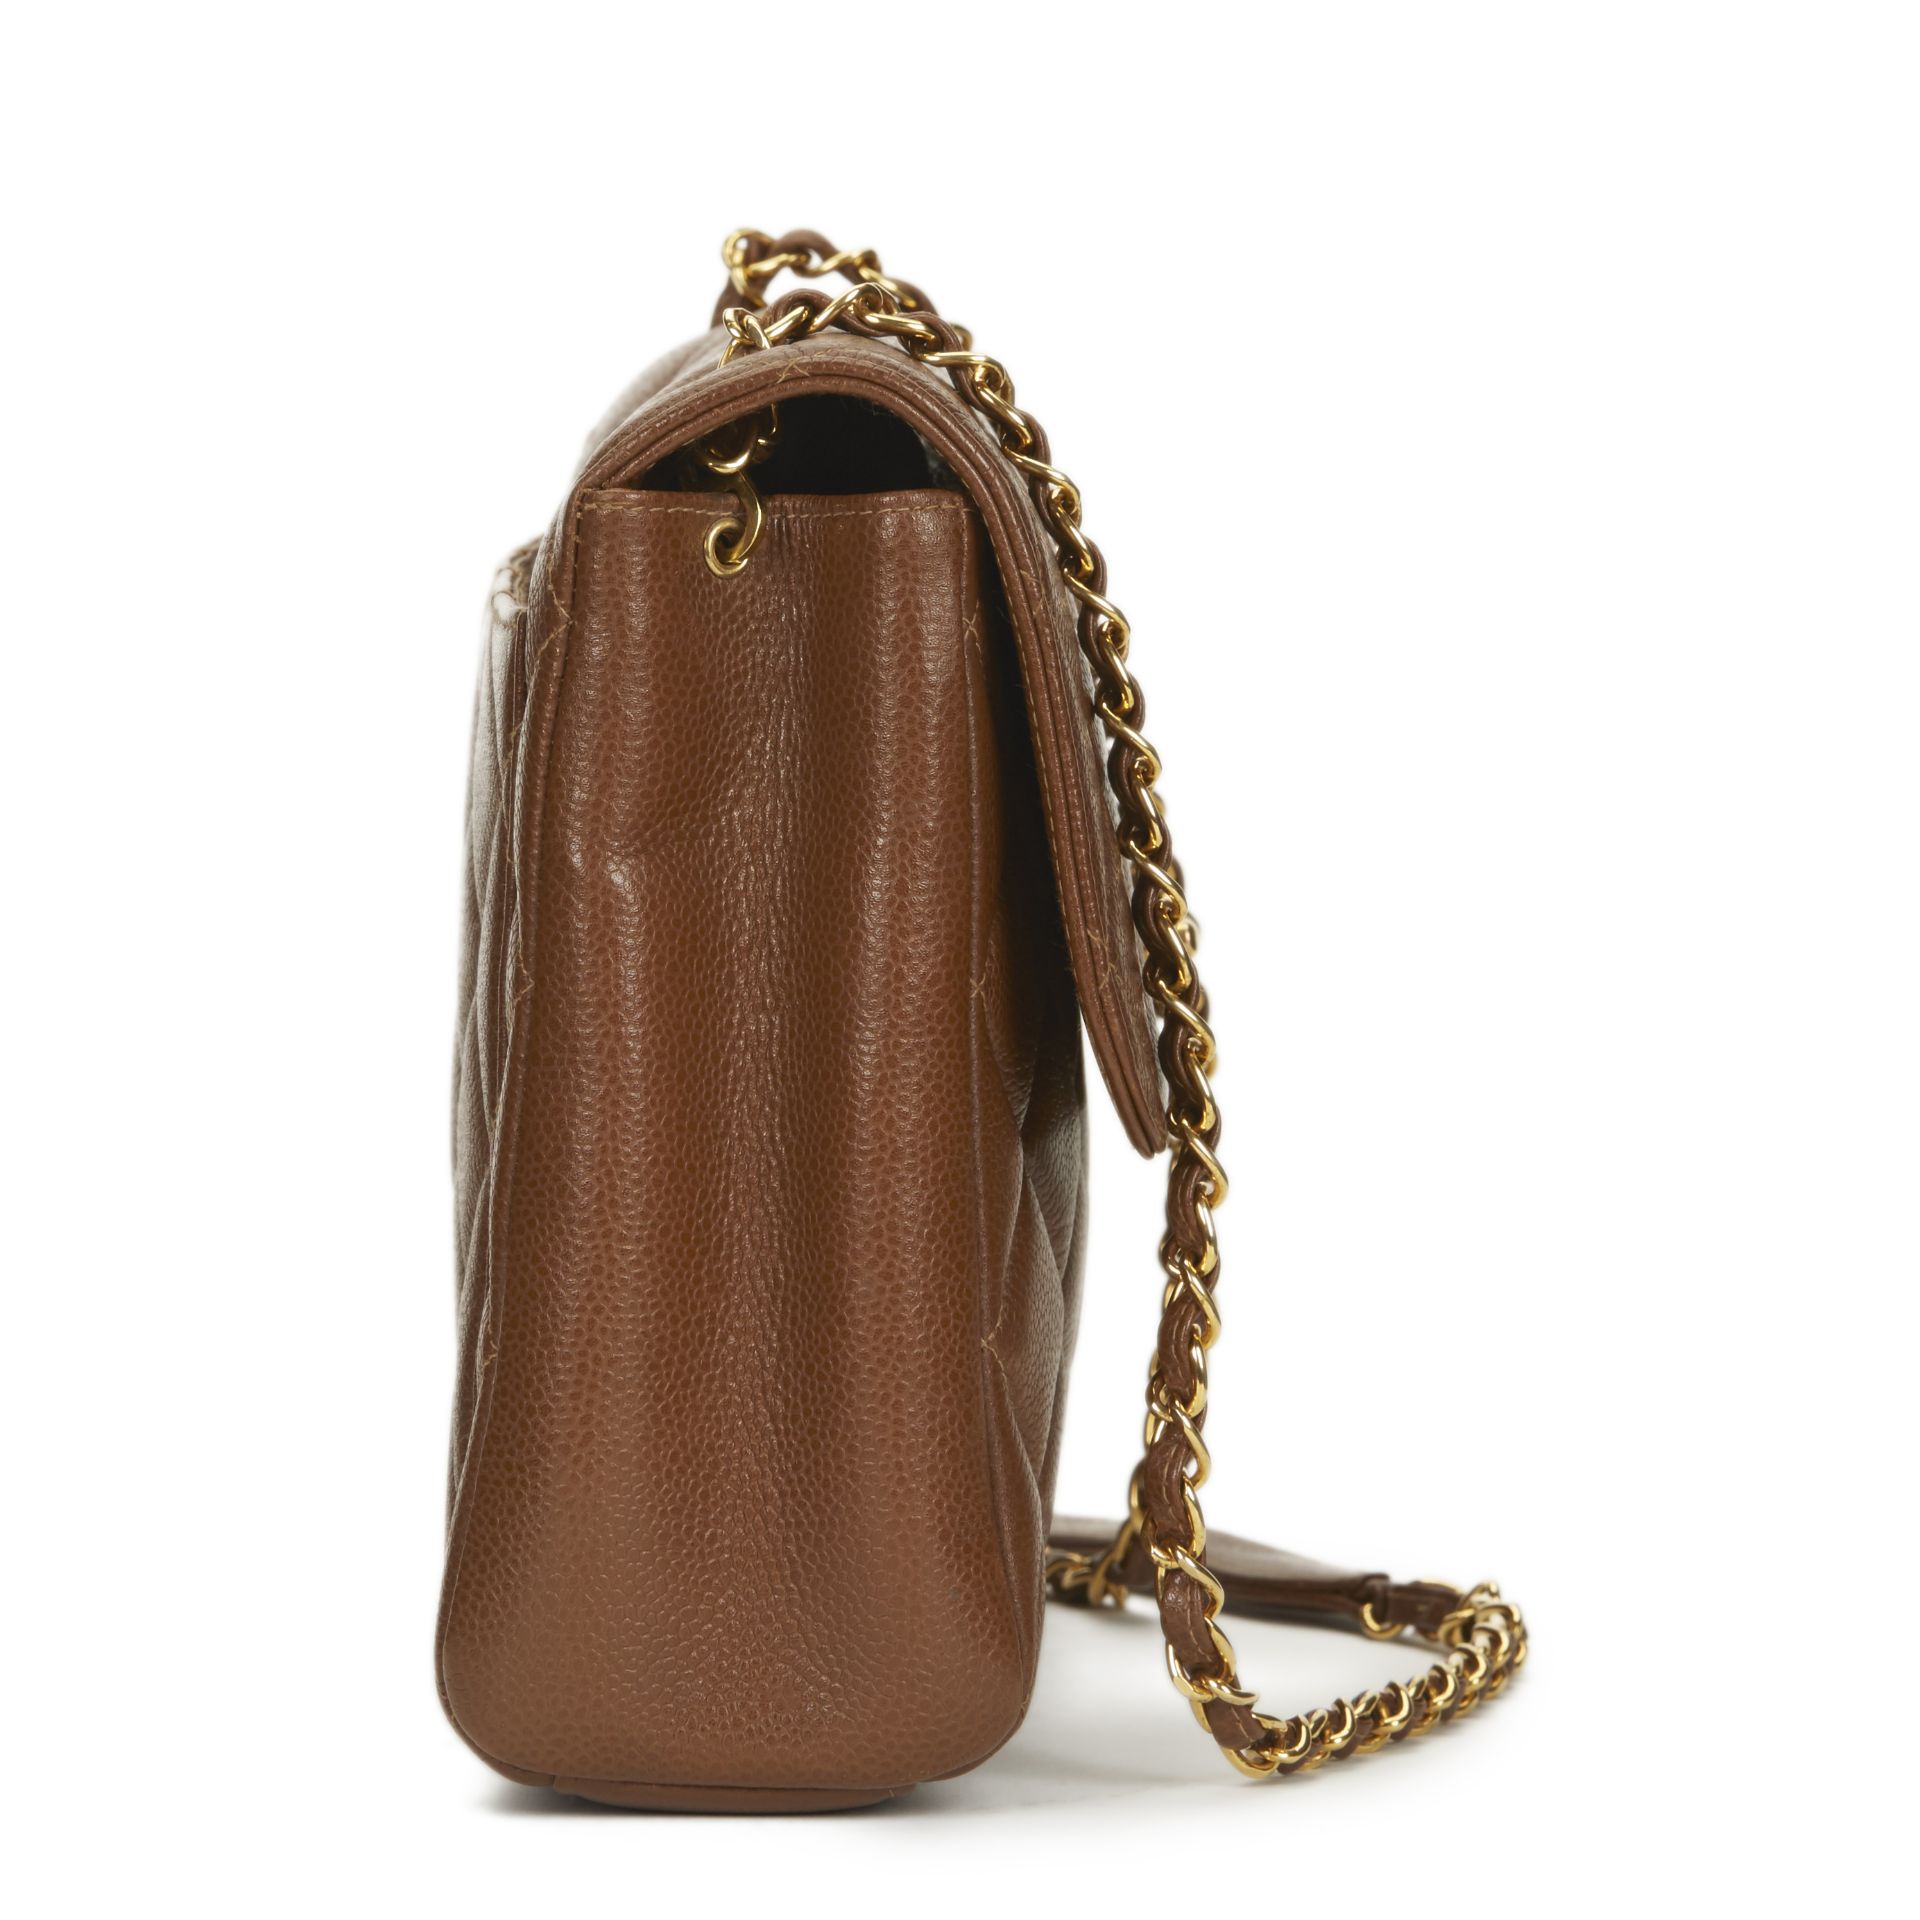 Chanel Single Flap Bag - Image 4 of 11